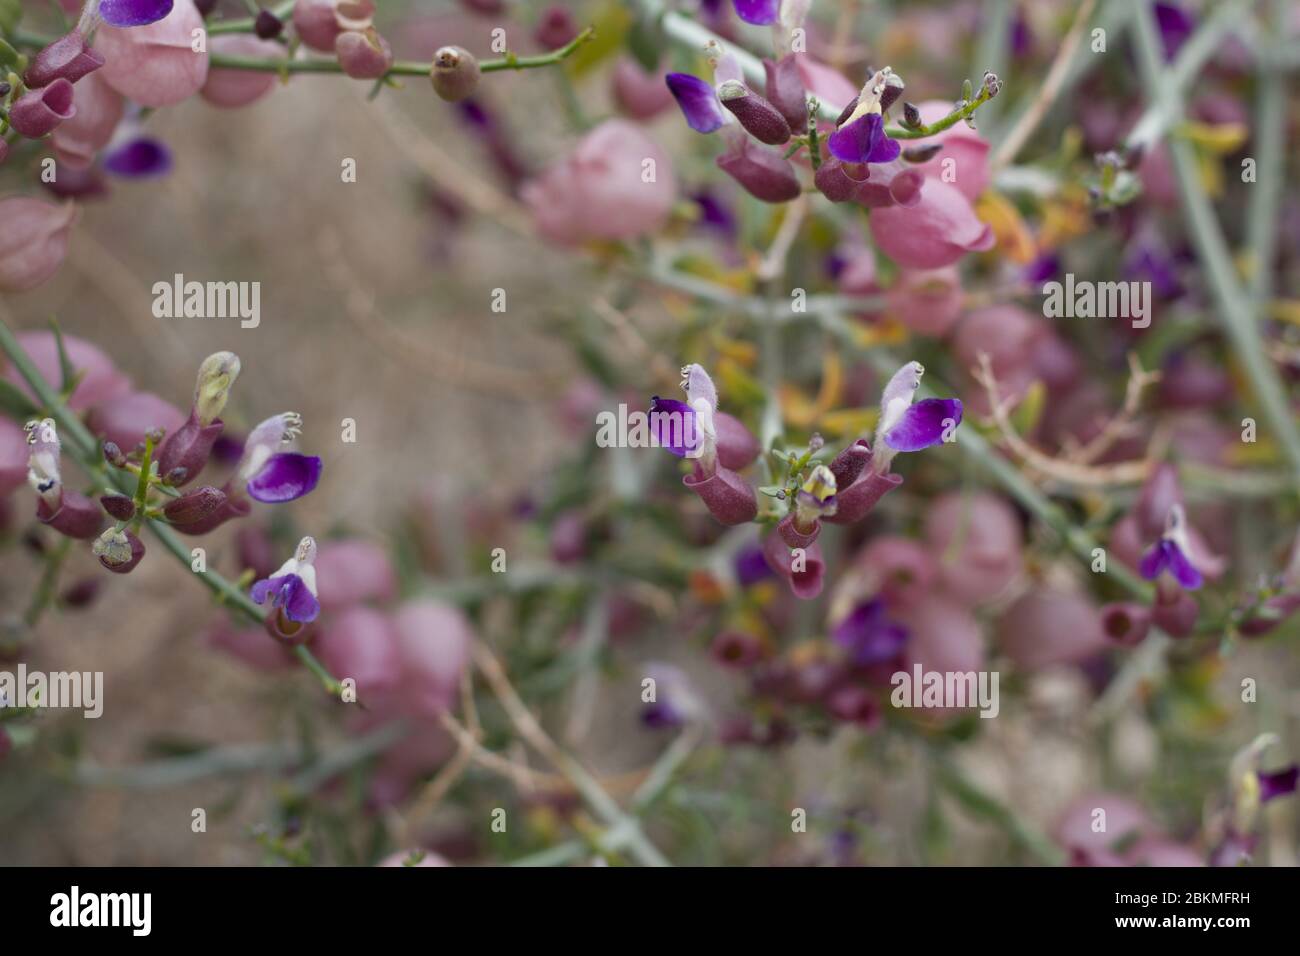 Mature flower Calyxes on Bladder Sage, Scutellaria Mexicana, Lamiaceae, native plant, Joshua Tree National Park, Southern Mojave Desert, Springtime. Stock Photo